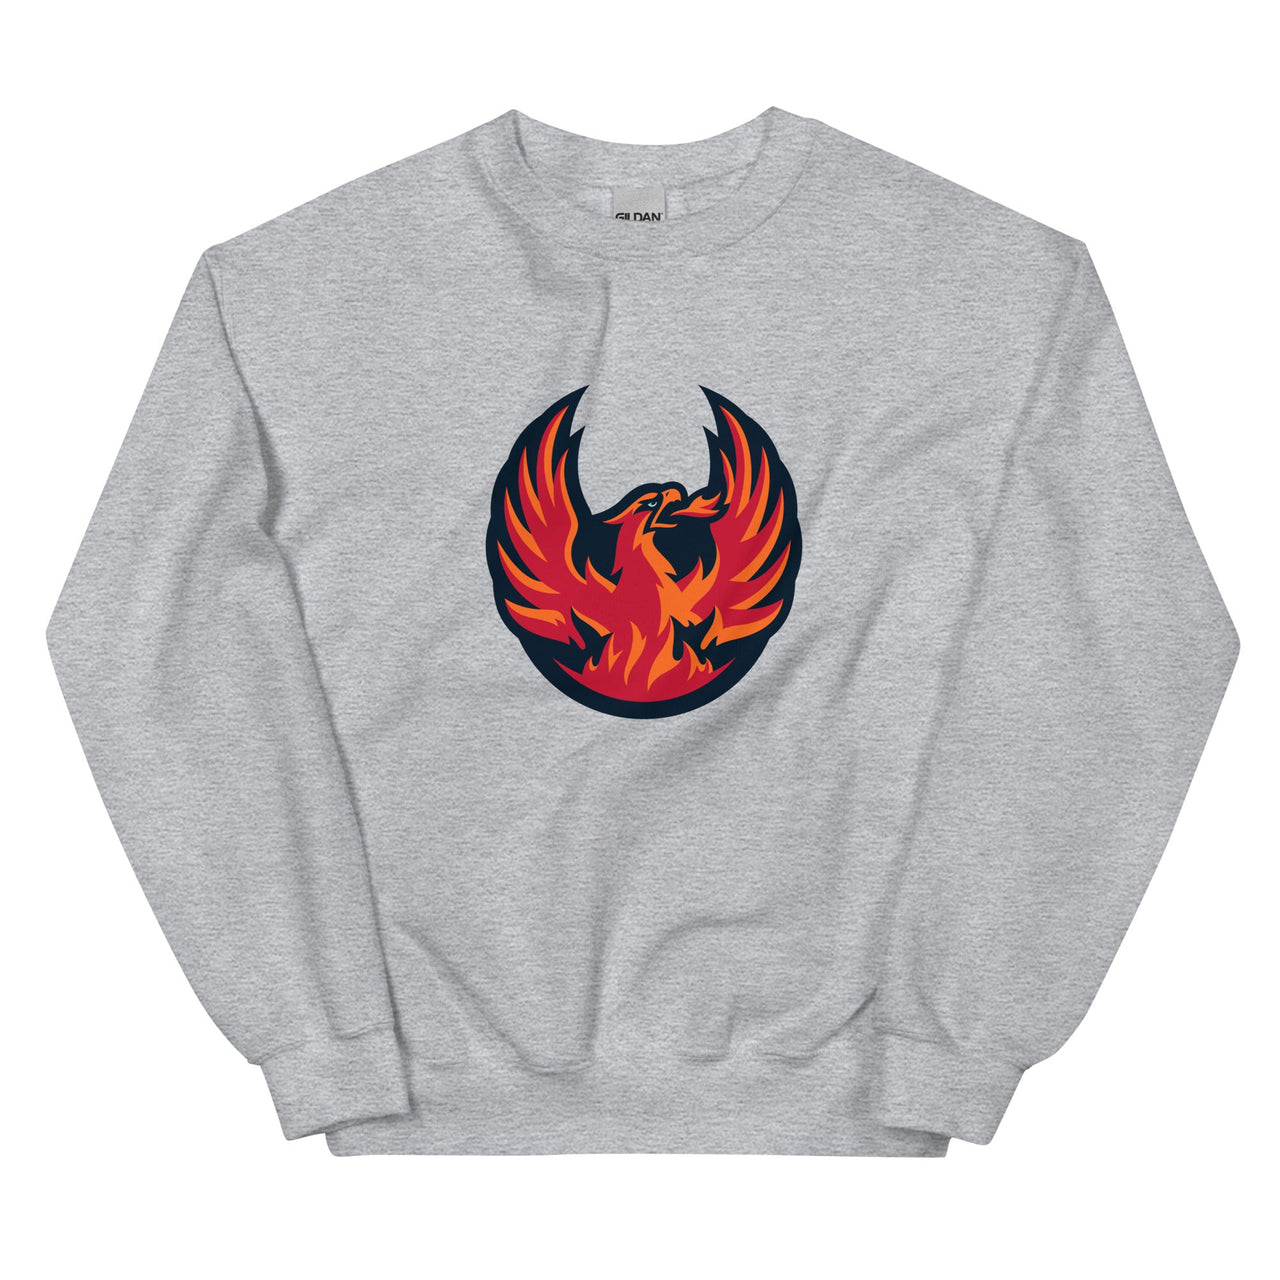 Coachella Valley Firebirds Adult Primary Logo Crewneck Sweatshirt (Sidewalk Sale, Grey, Medium)